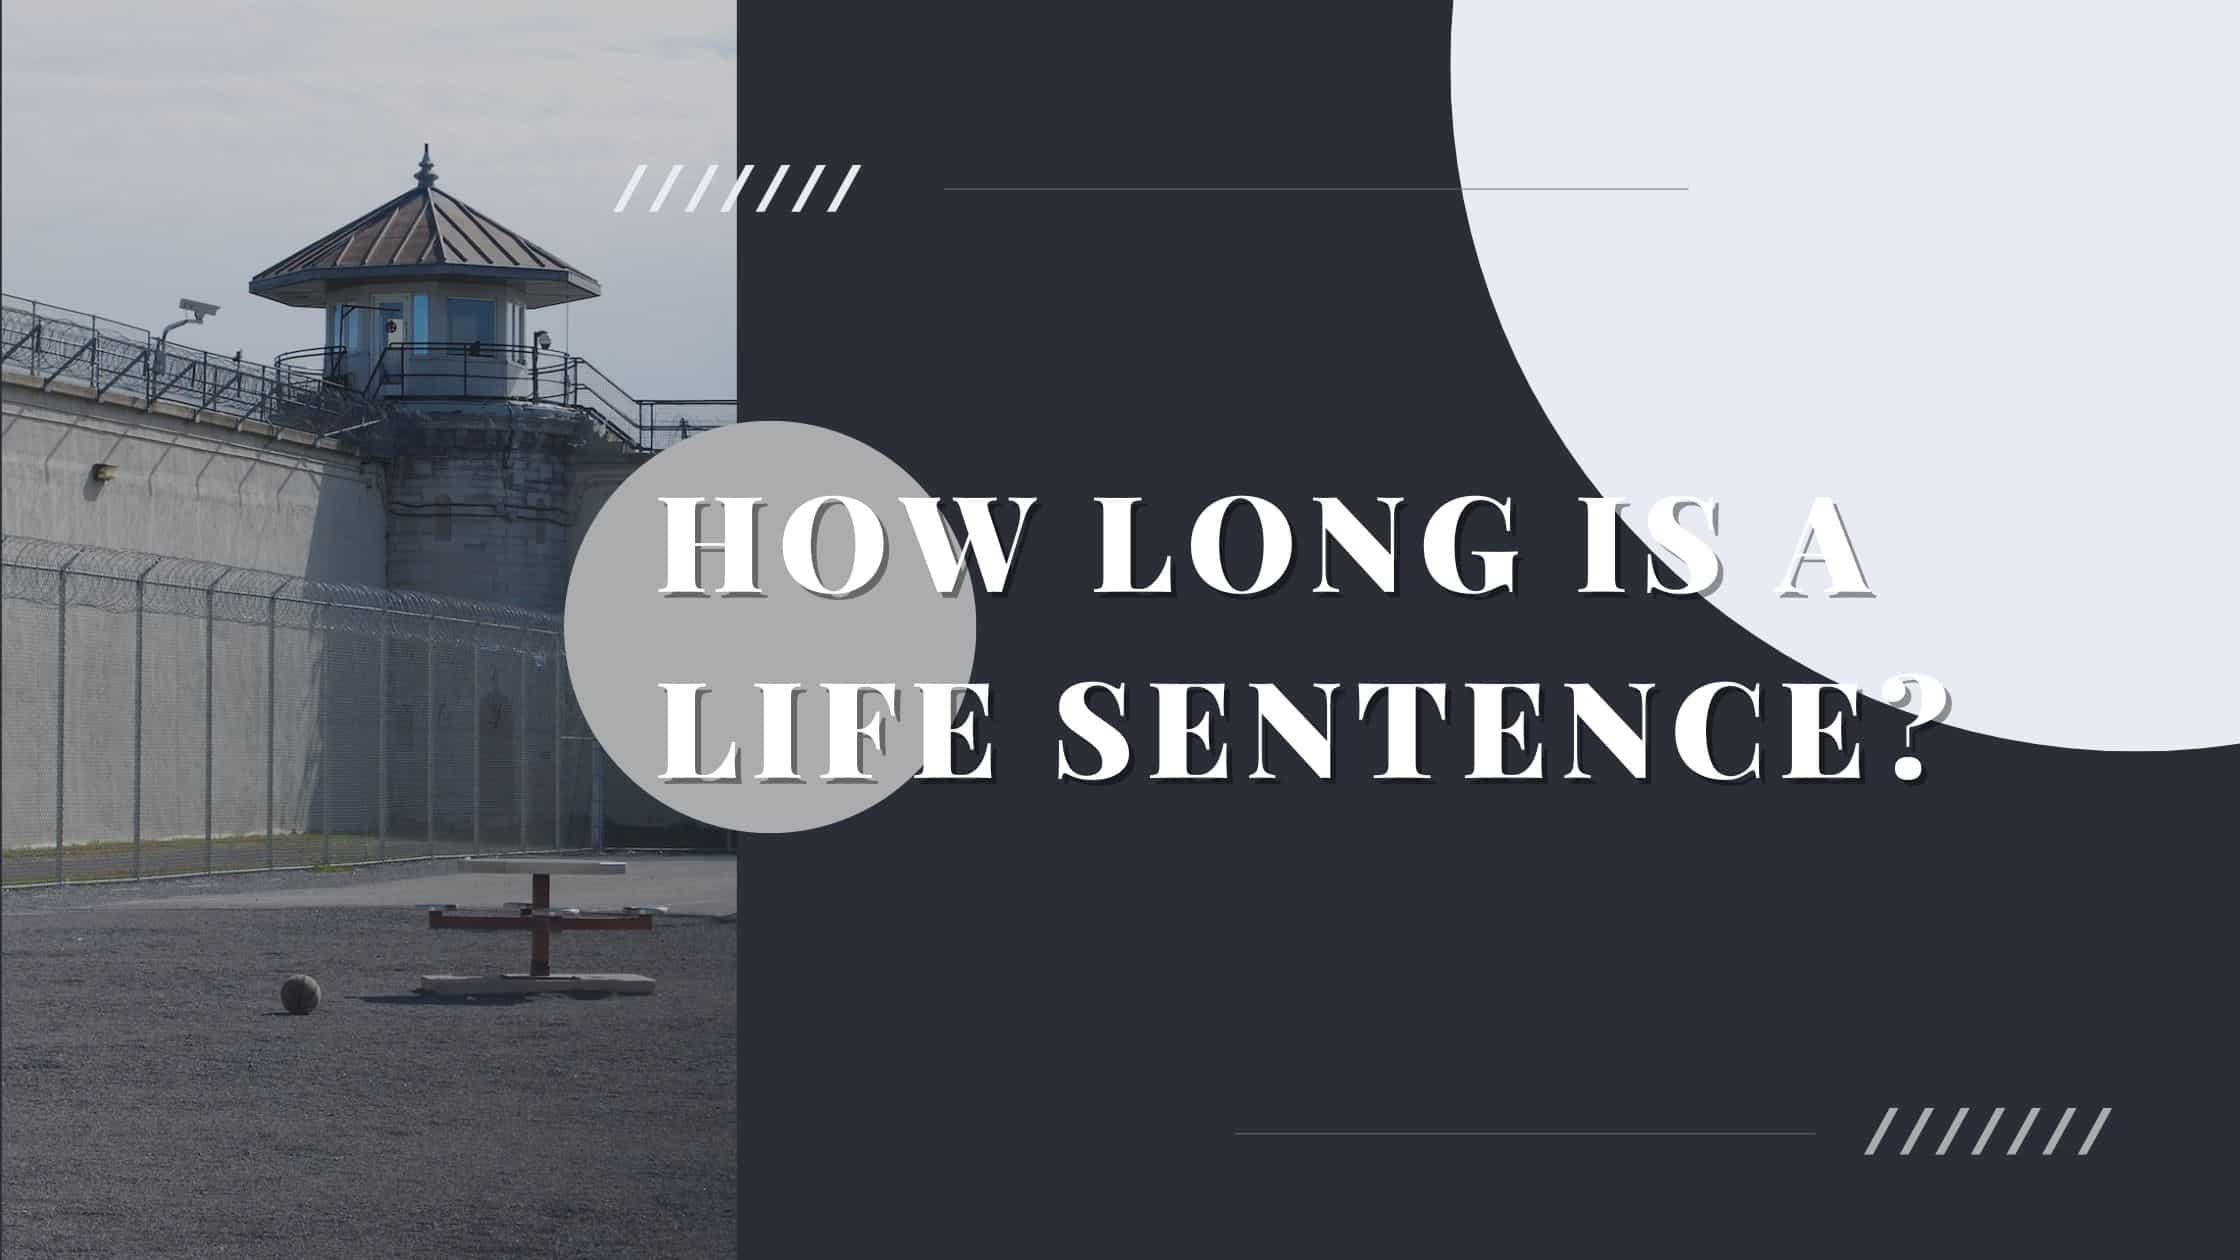 Life sentence, duration.